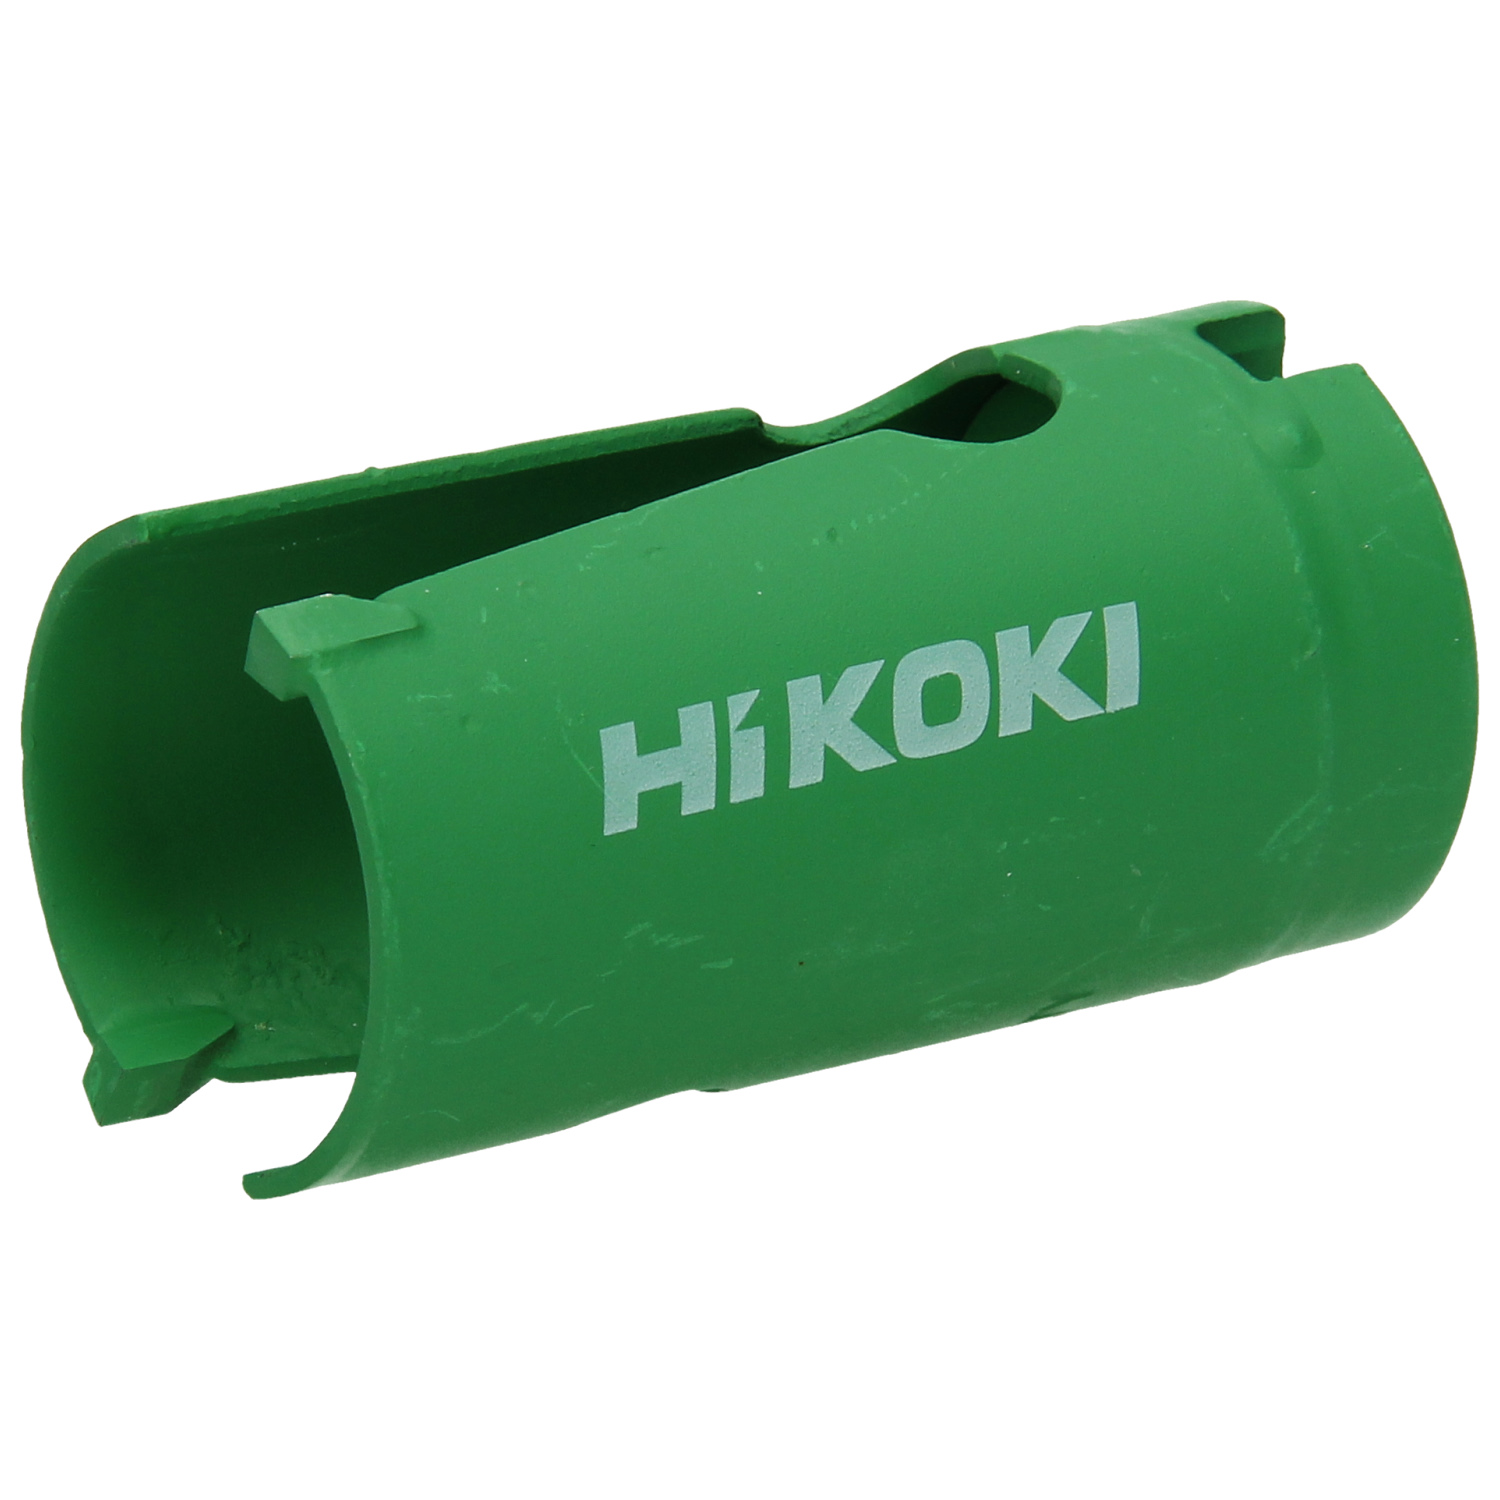 Hikoki HM-Lochsäge 35mm 754209